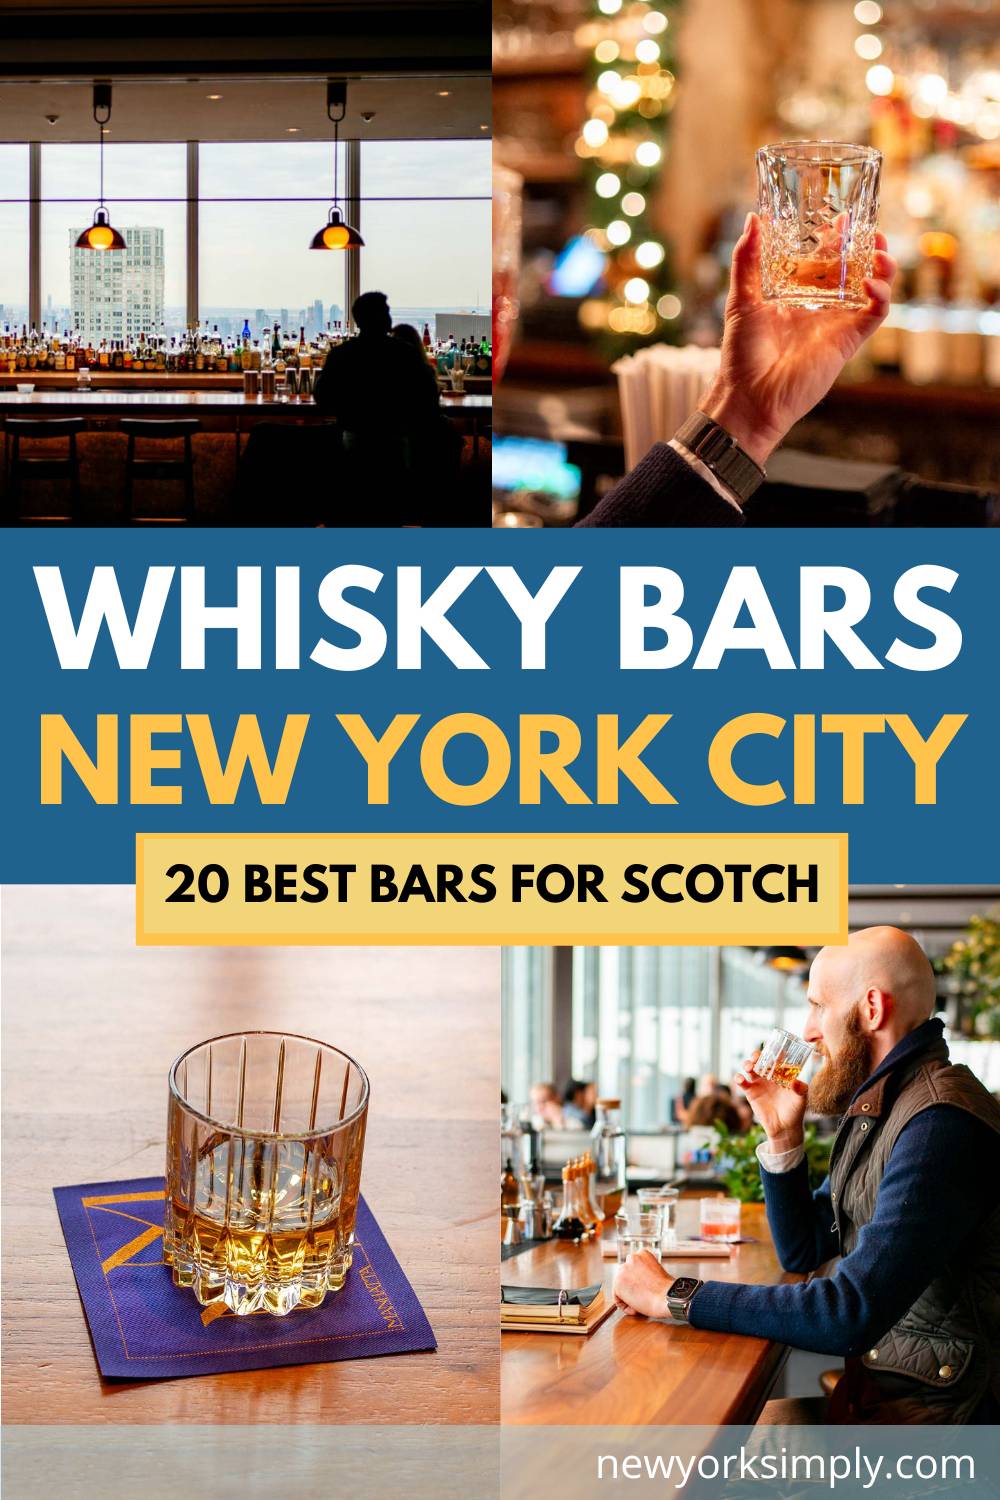 scotch whisky bars nyc, best whisky bars for scotch new york city